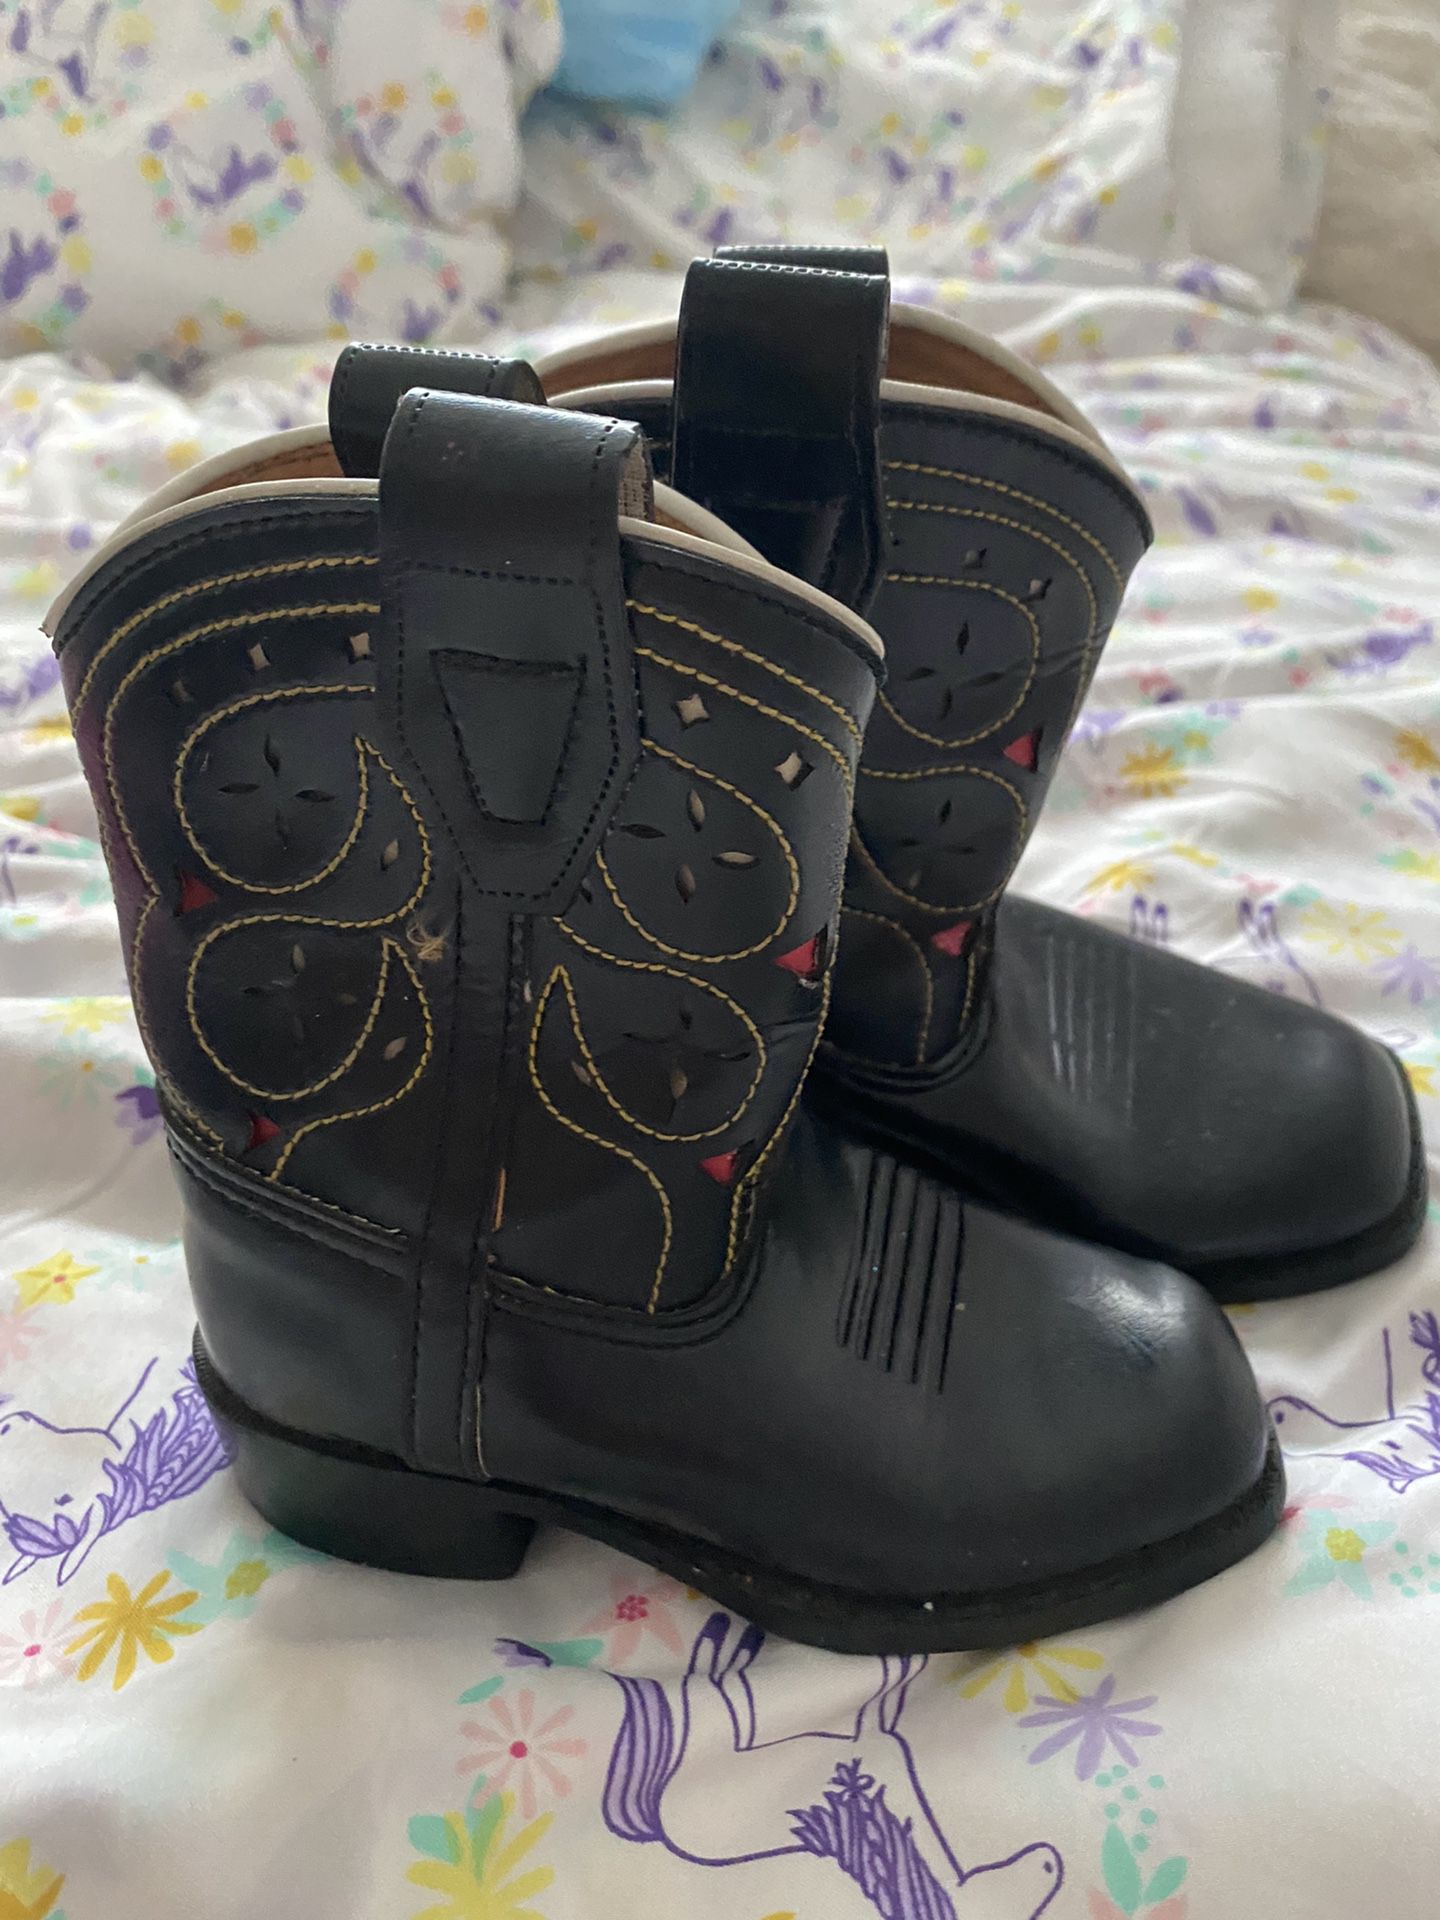 Little girls size 6 boots